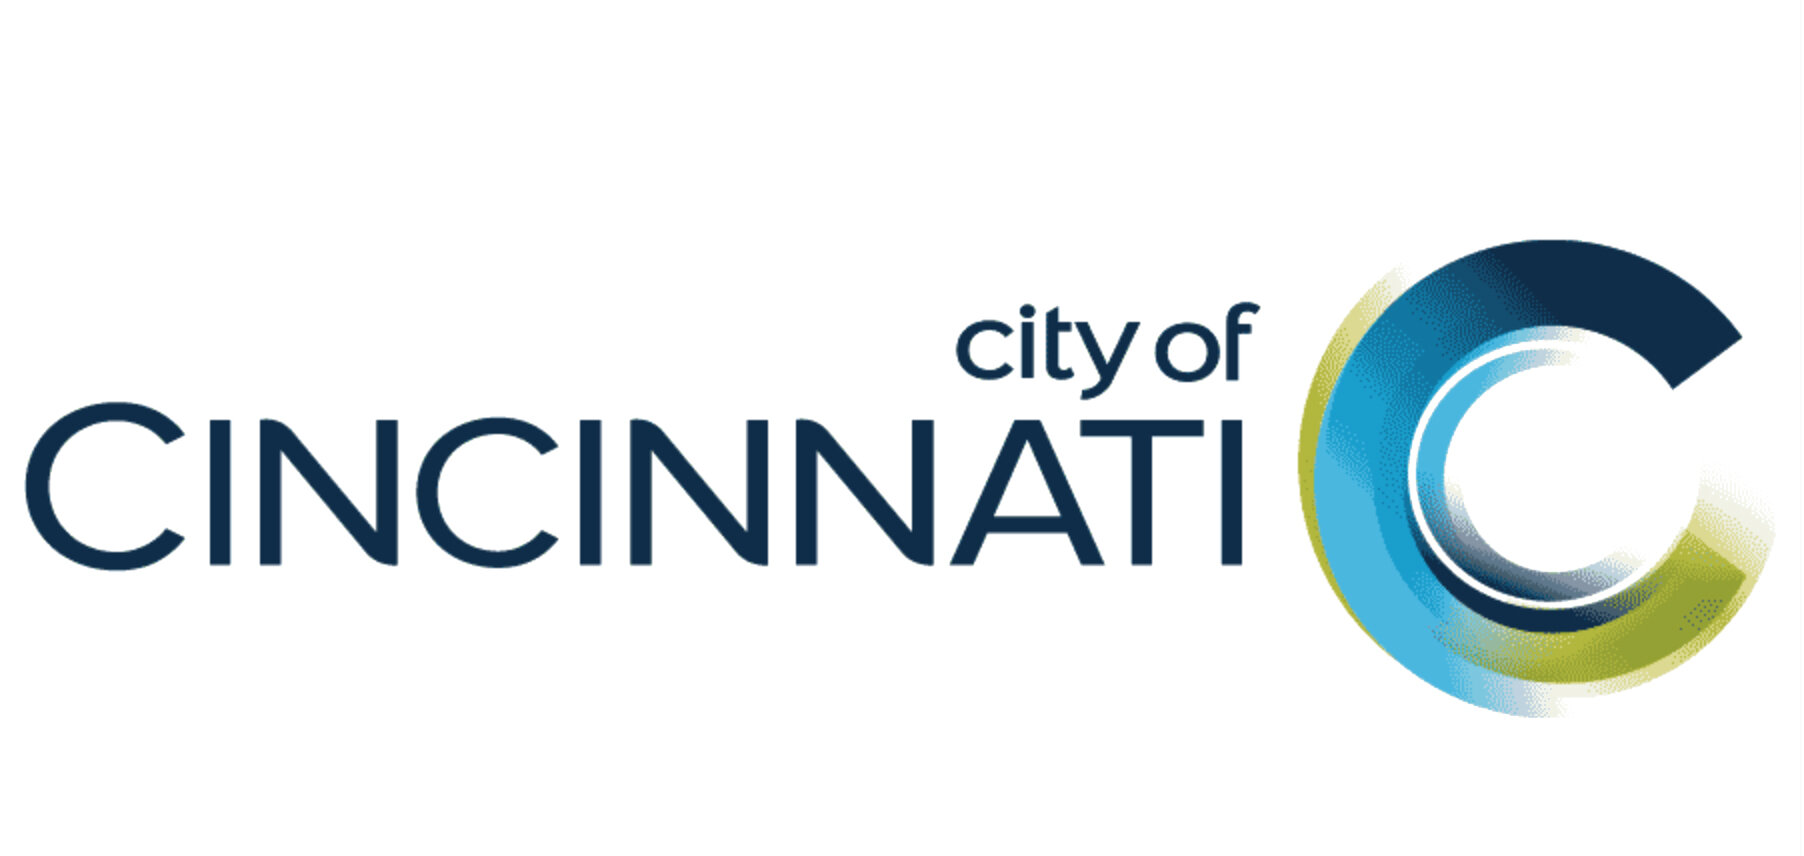 City of Cinci logo.jpg